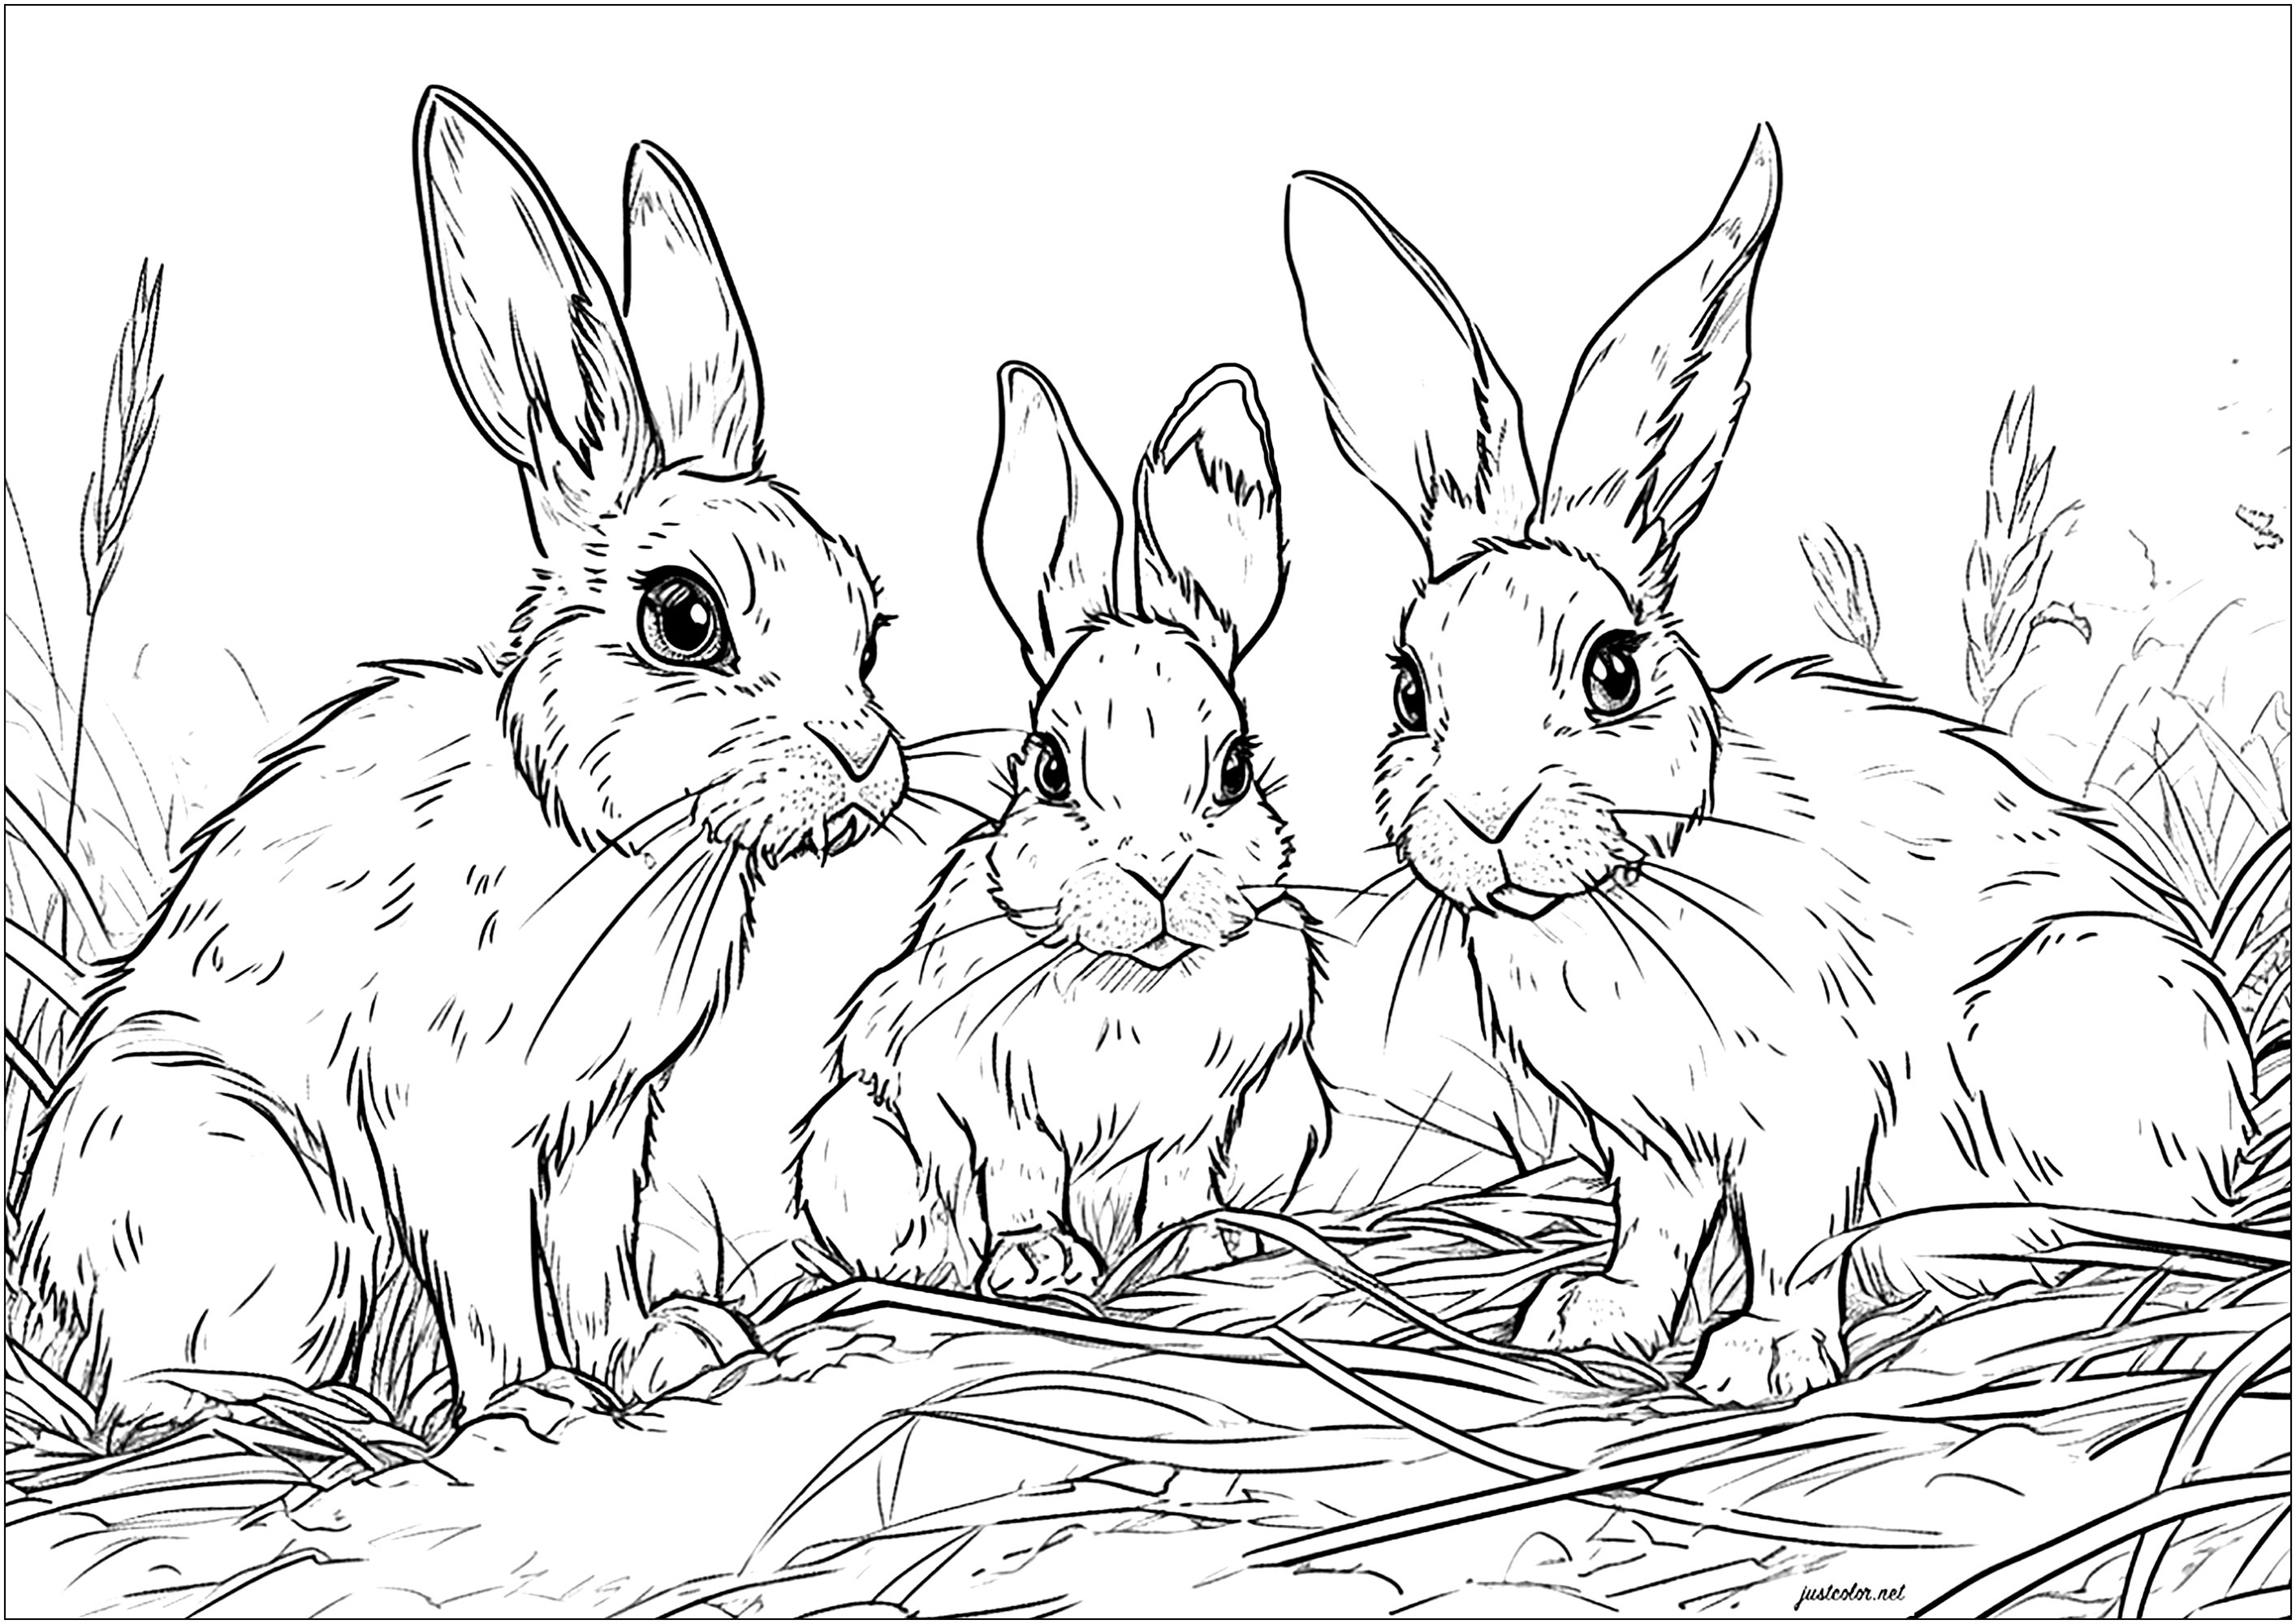 Three cute rabbits on straw